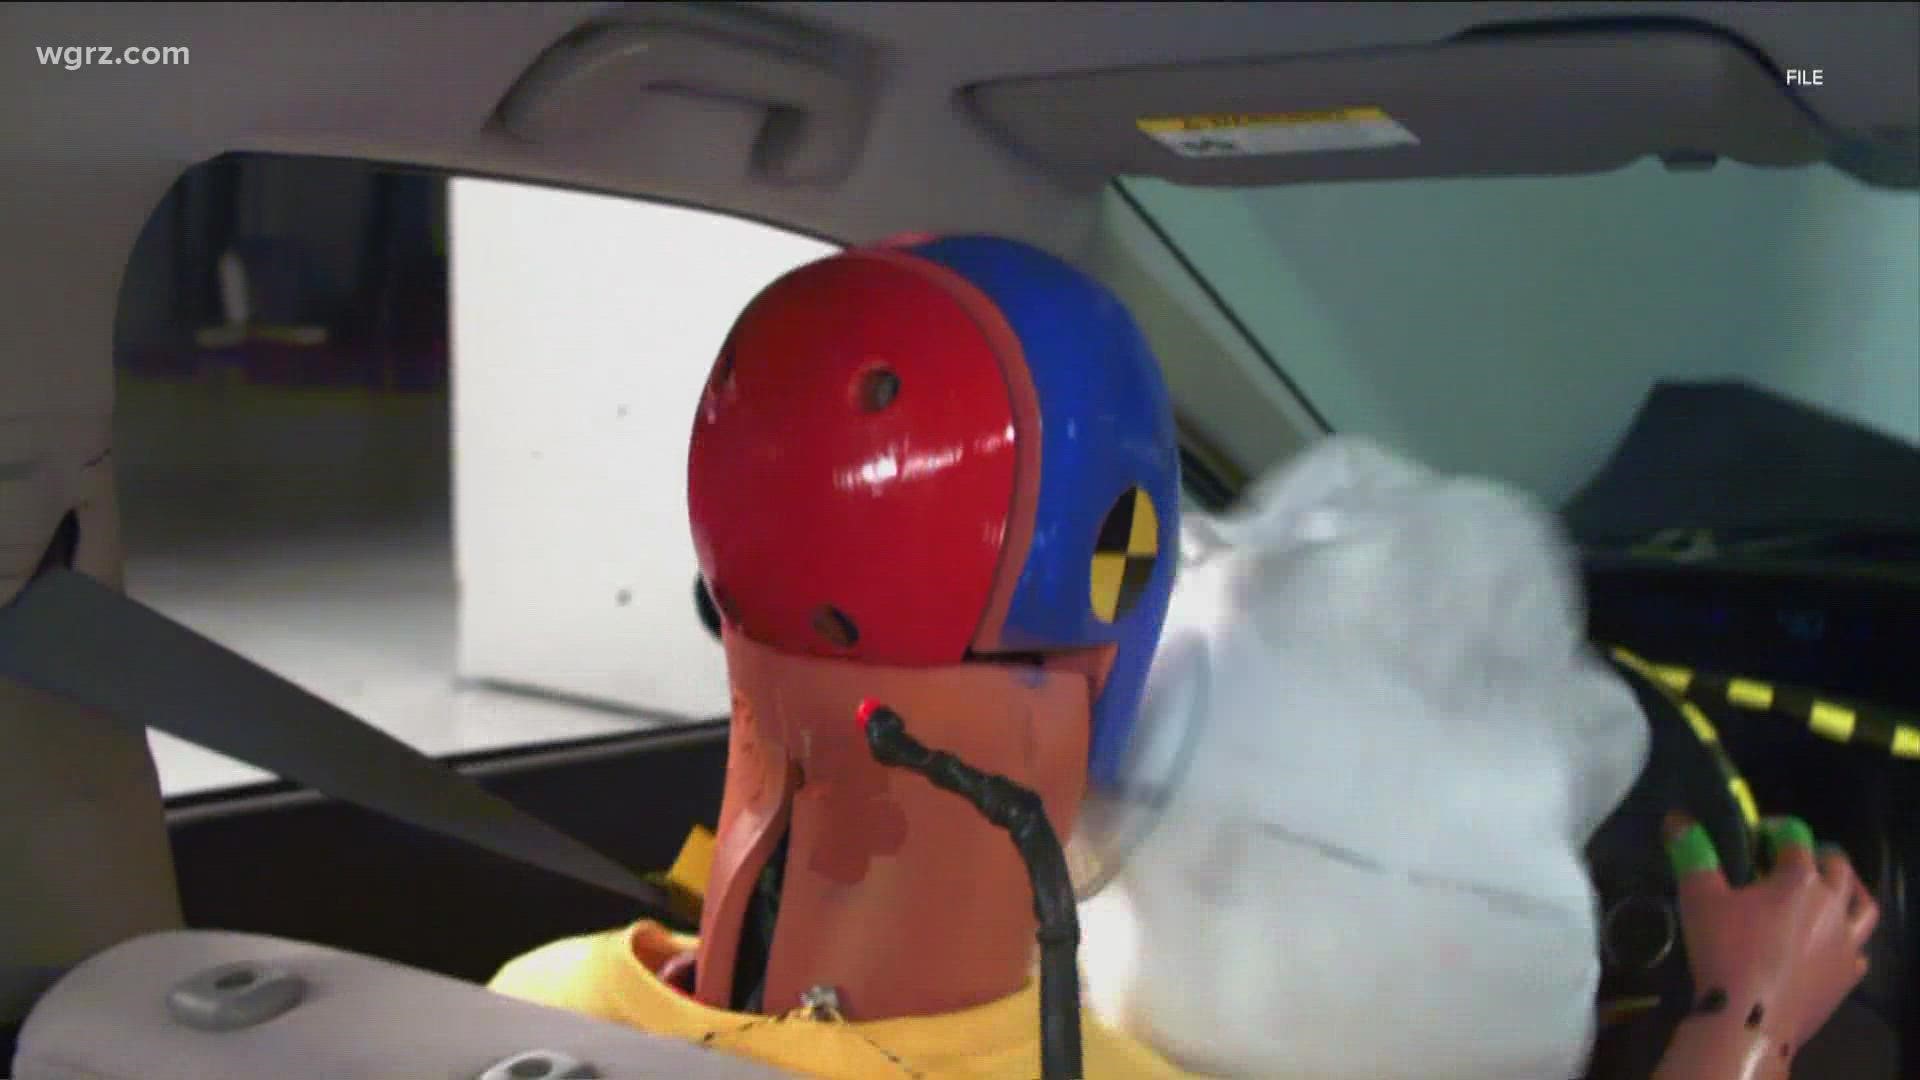 The VERFIY team examines claims about crash test dummies.